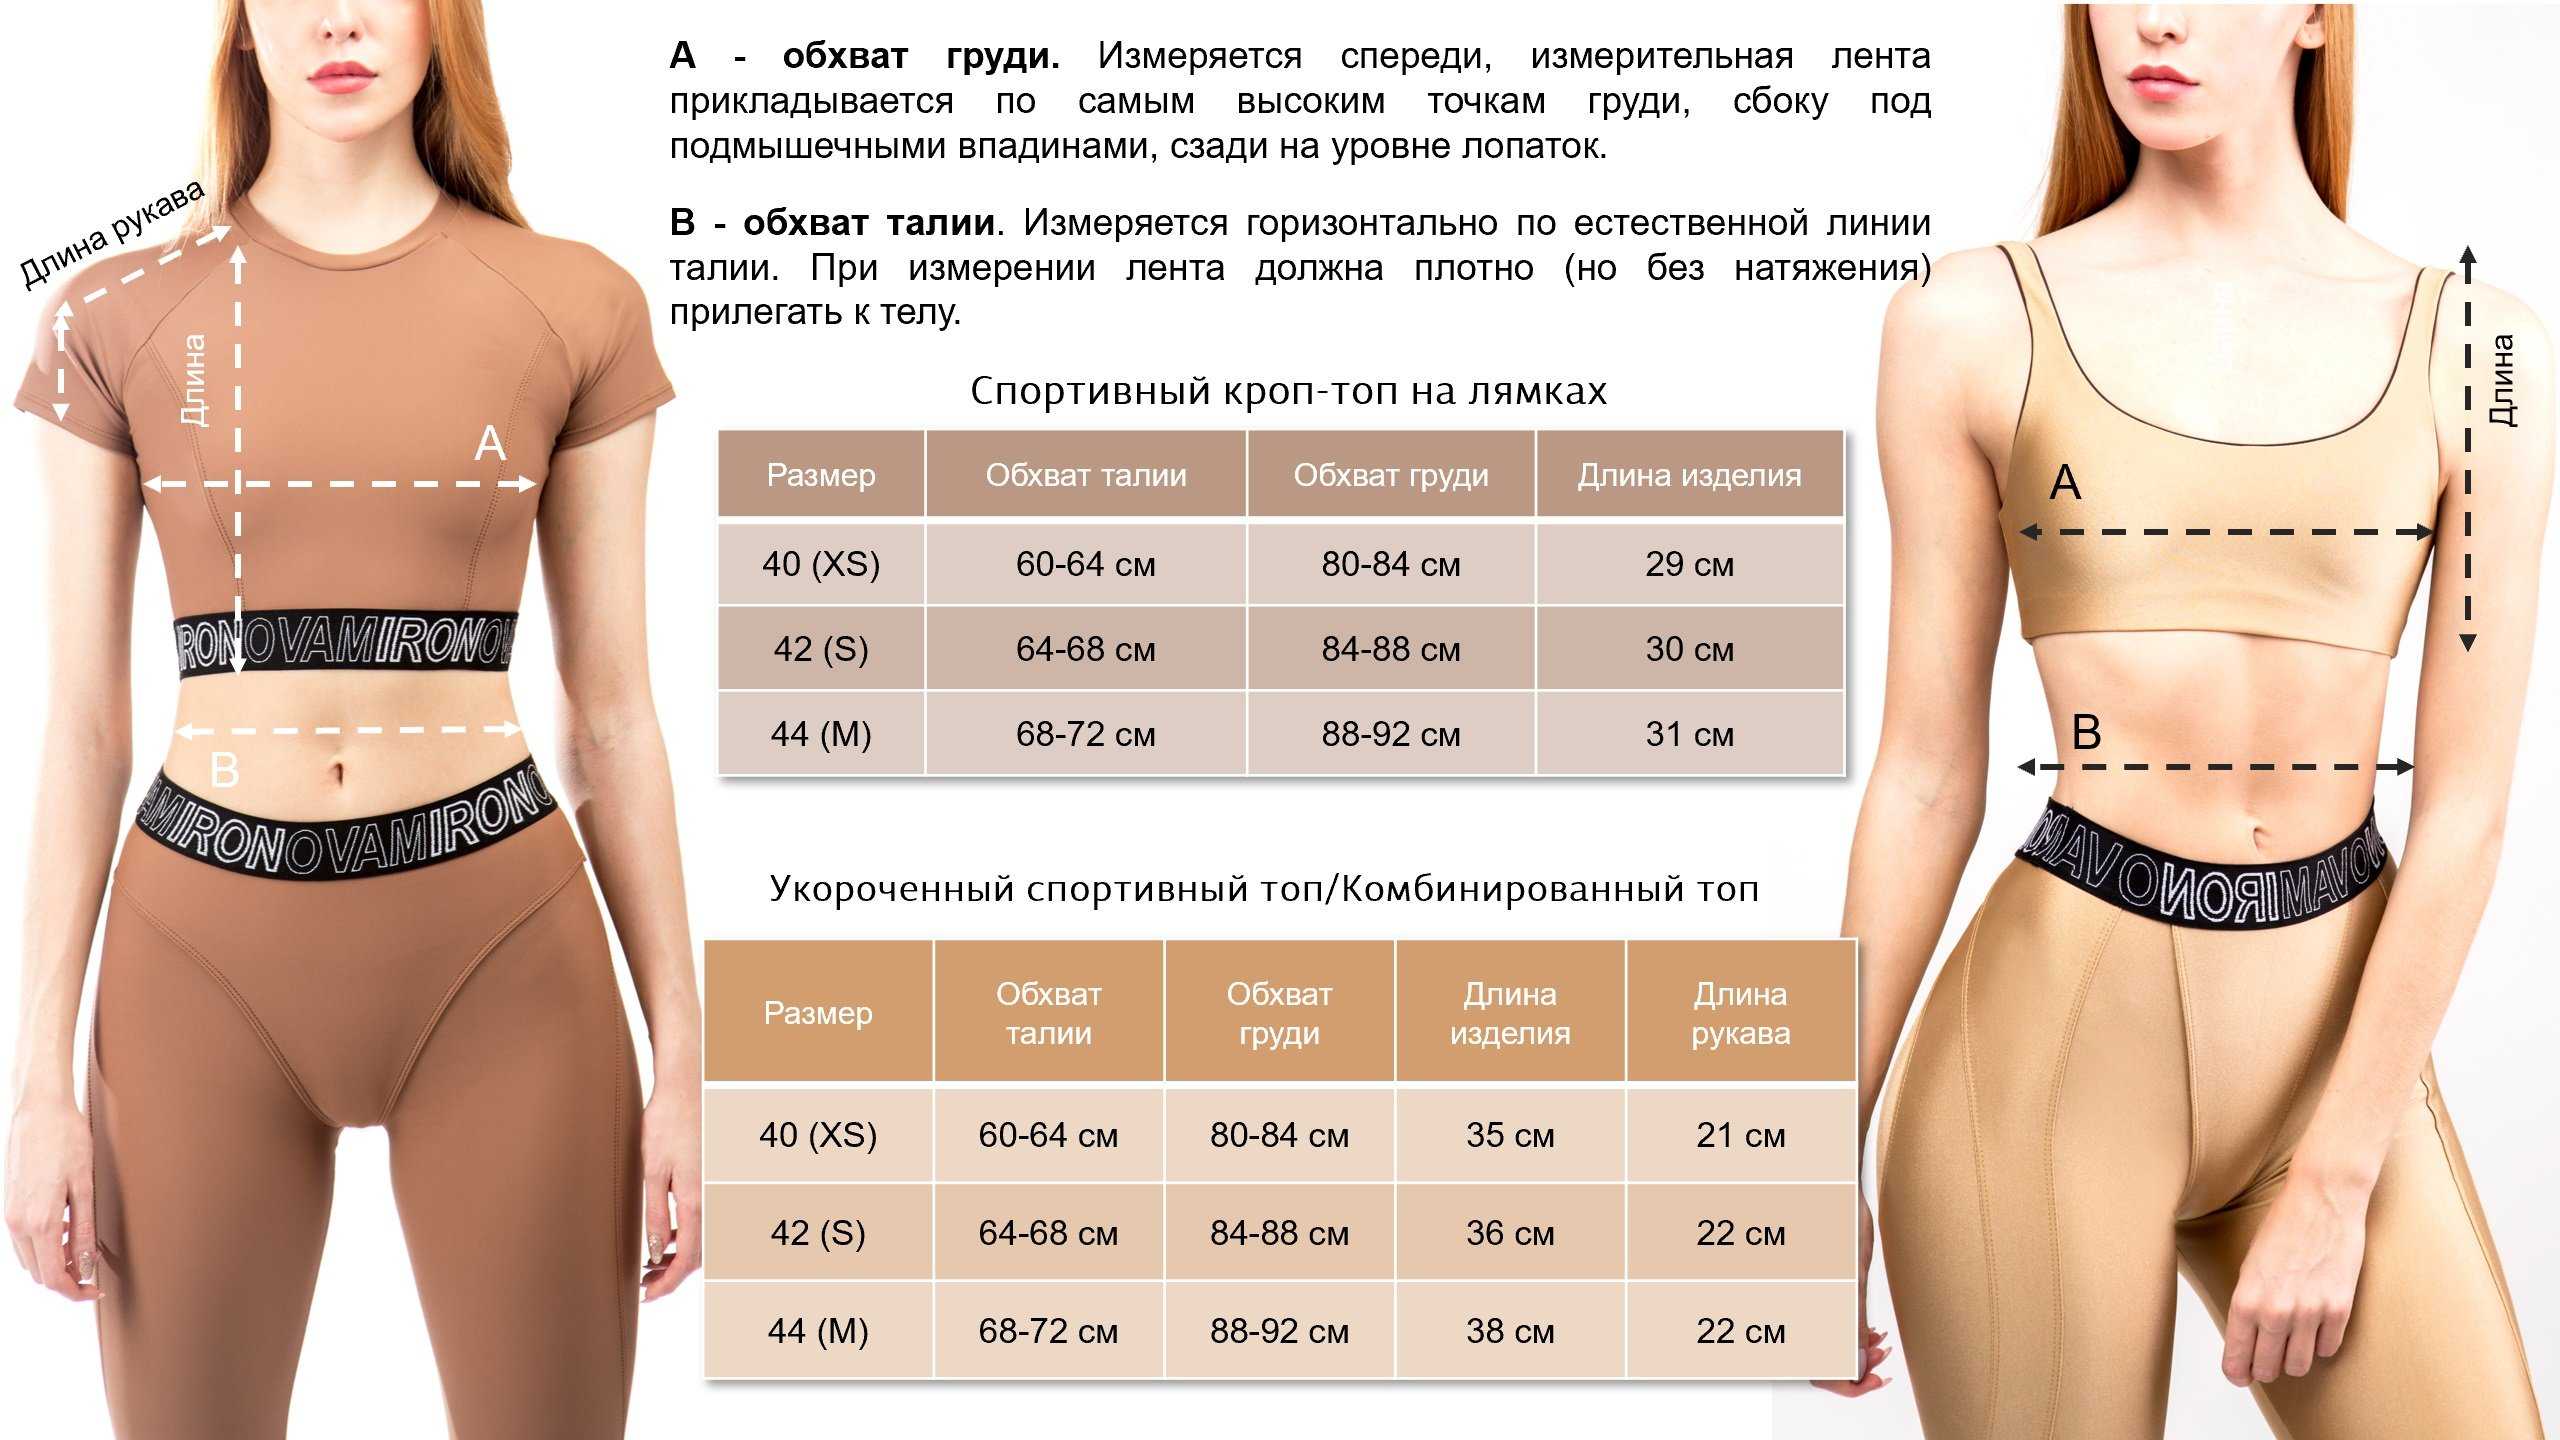 измерить обхват груди у мужчин фото 15